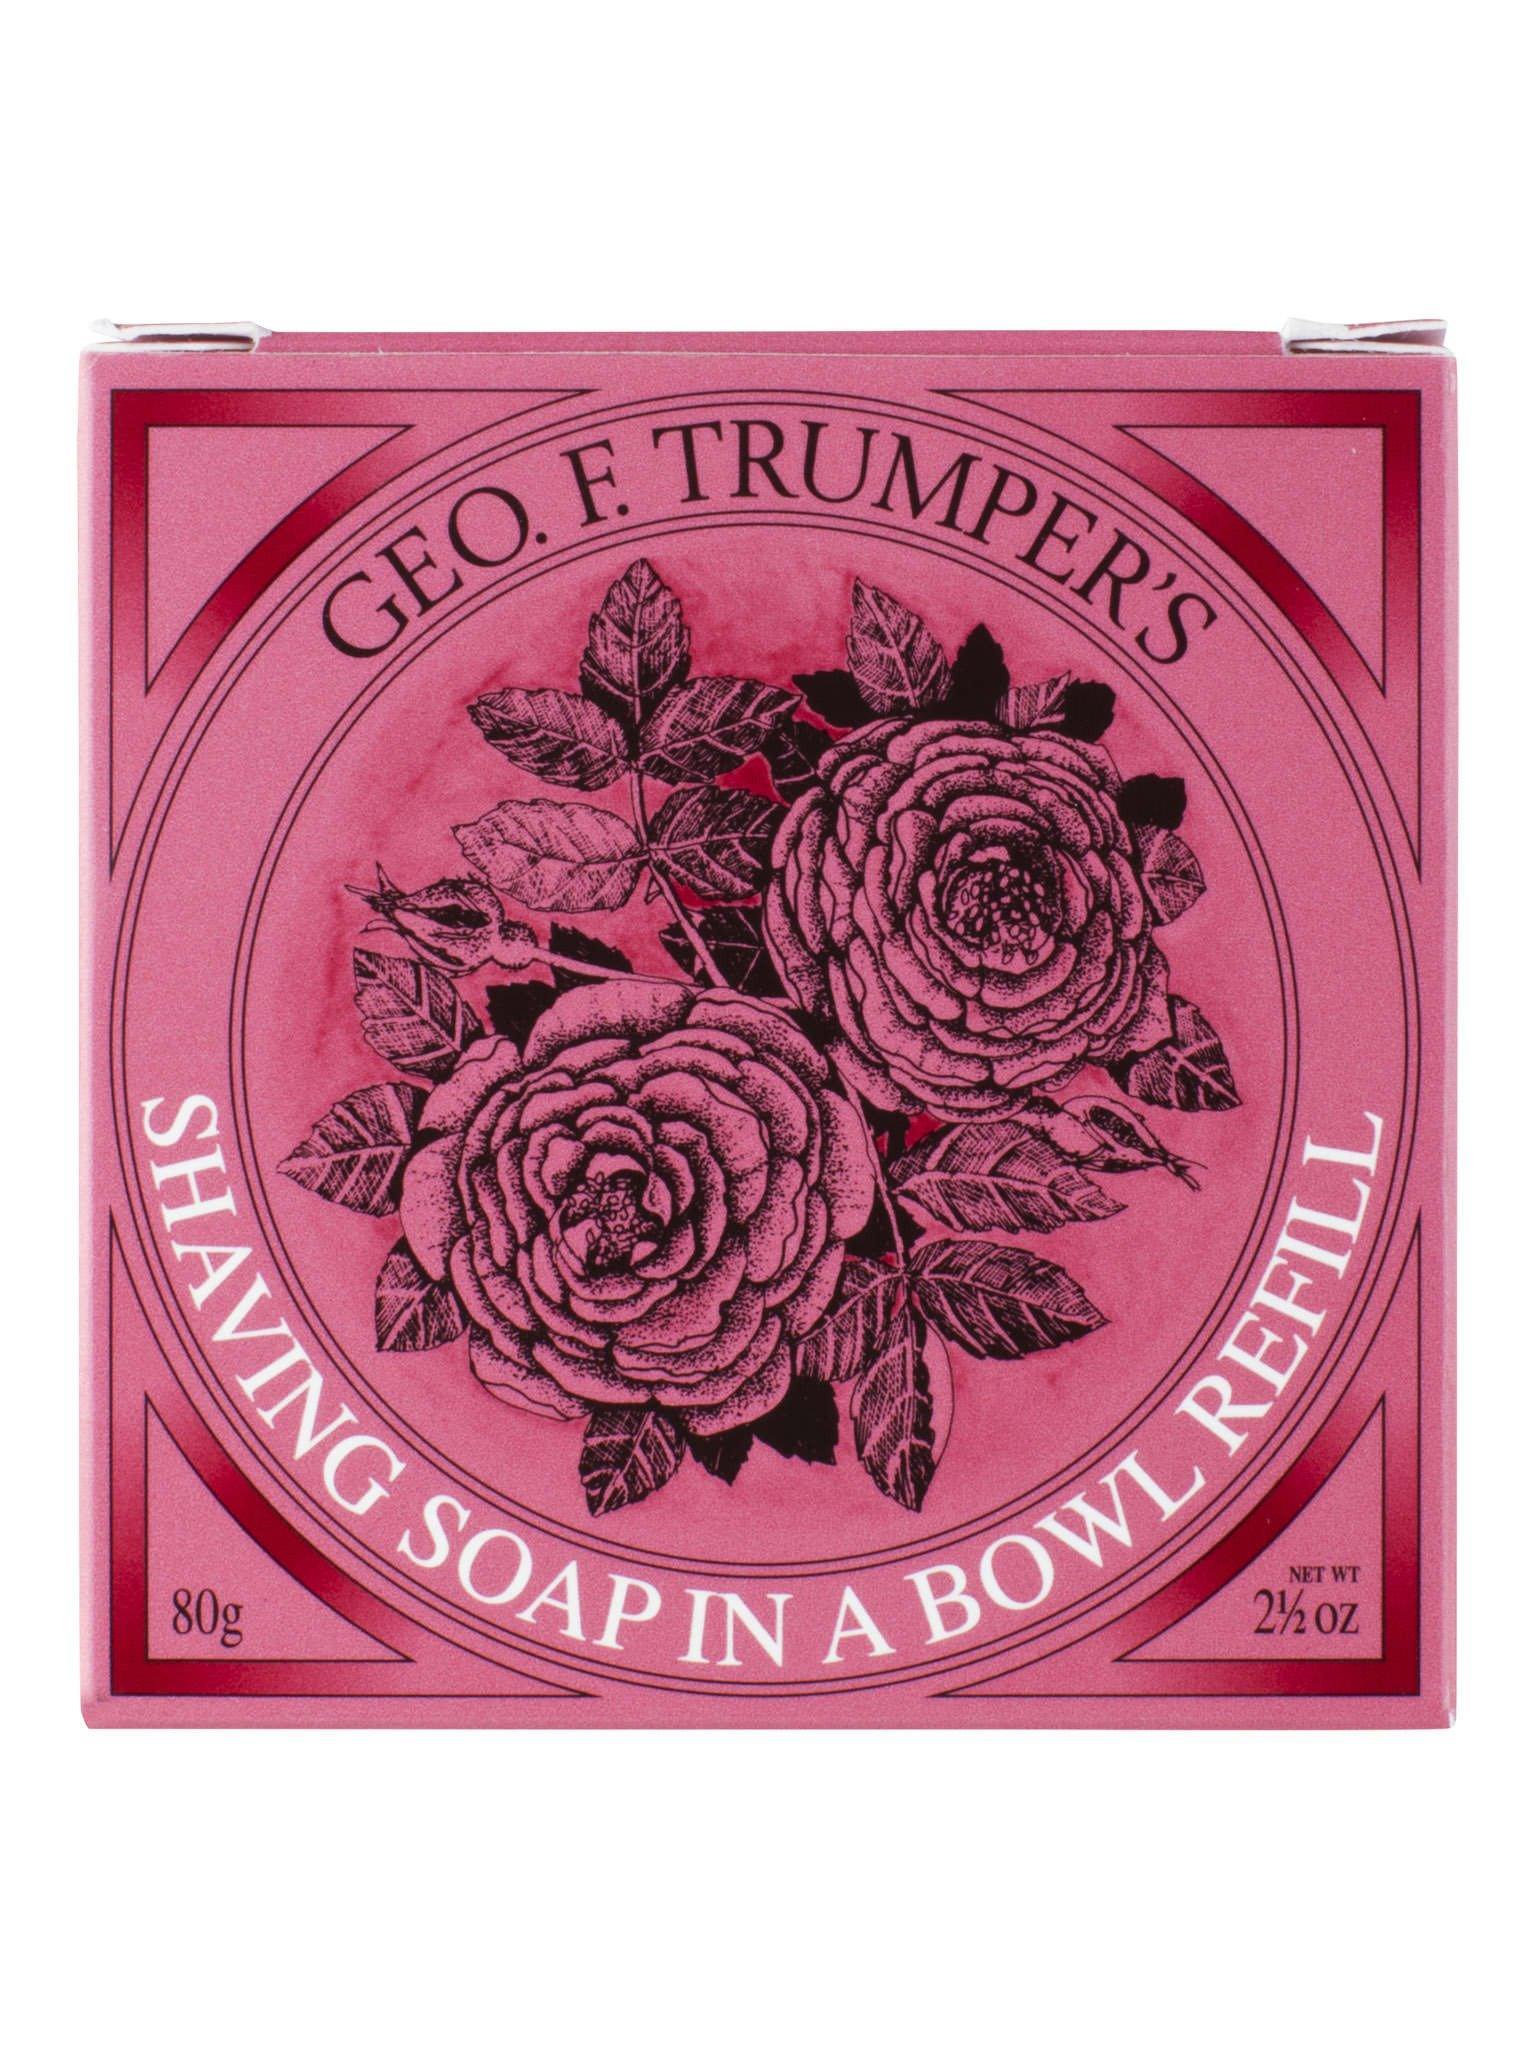 Geo F. Trumper barbersåpe refill - Rose